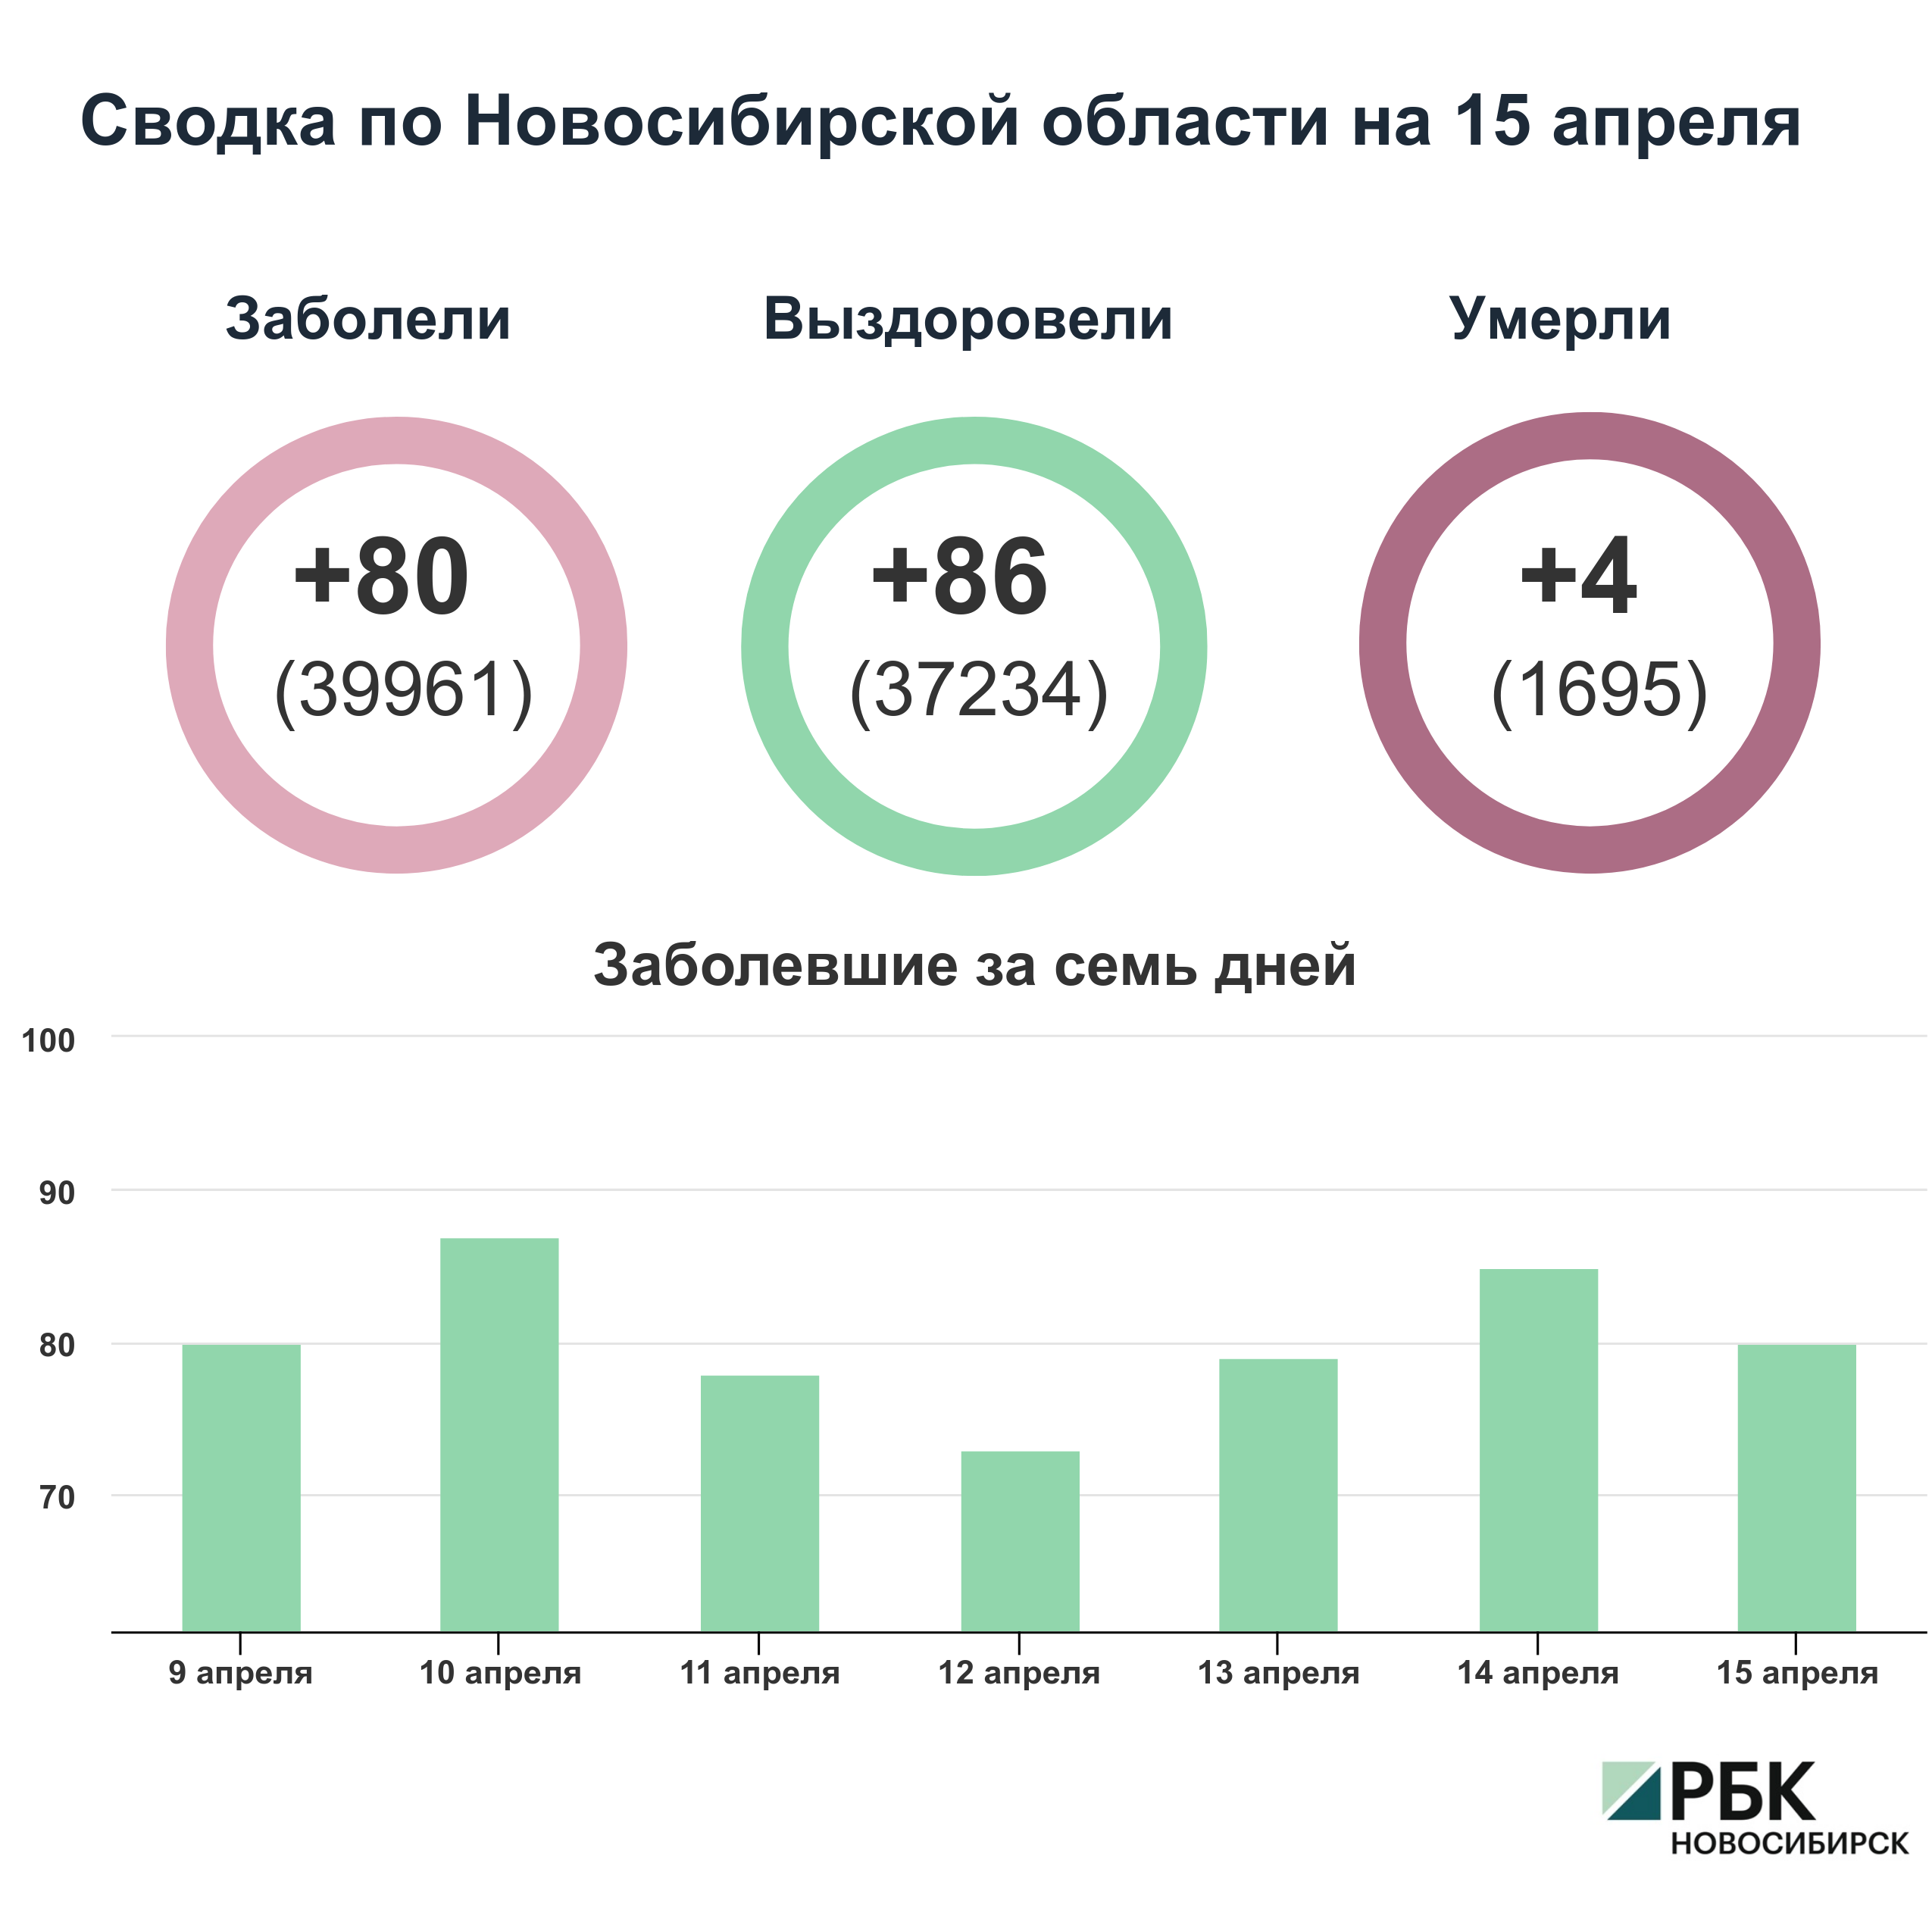 Коронавирус в Новосибирске: сводка на 15 апреля